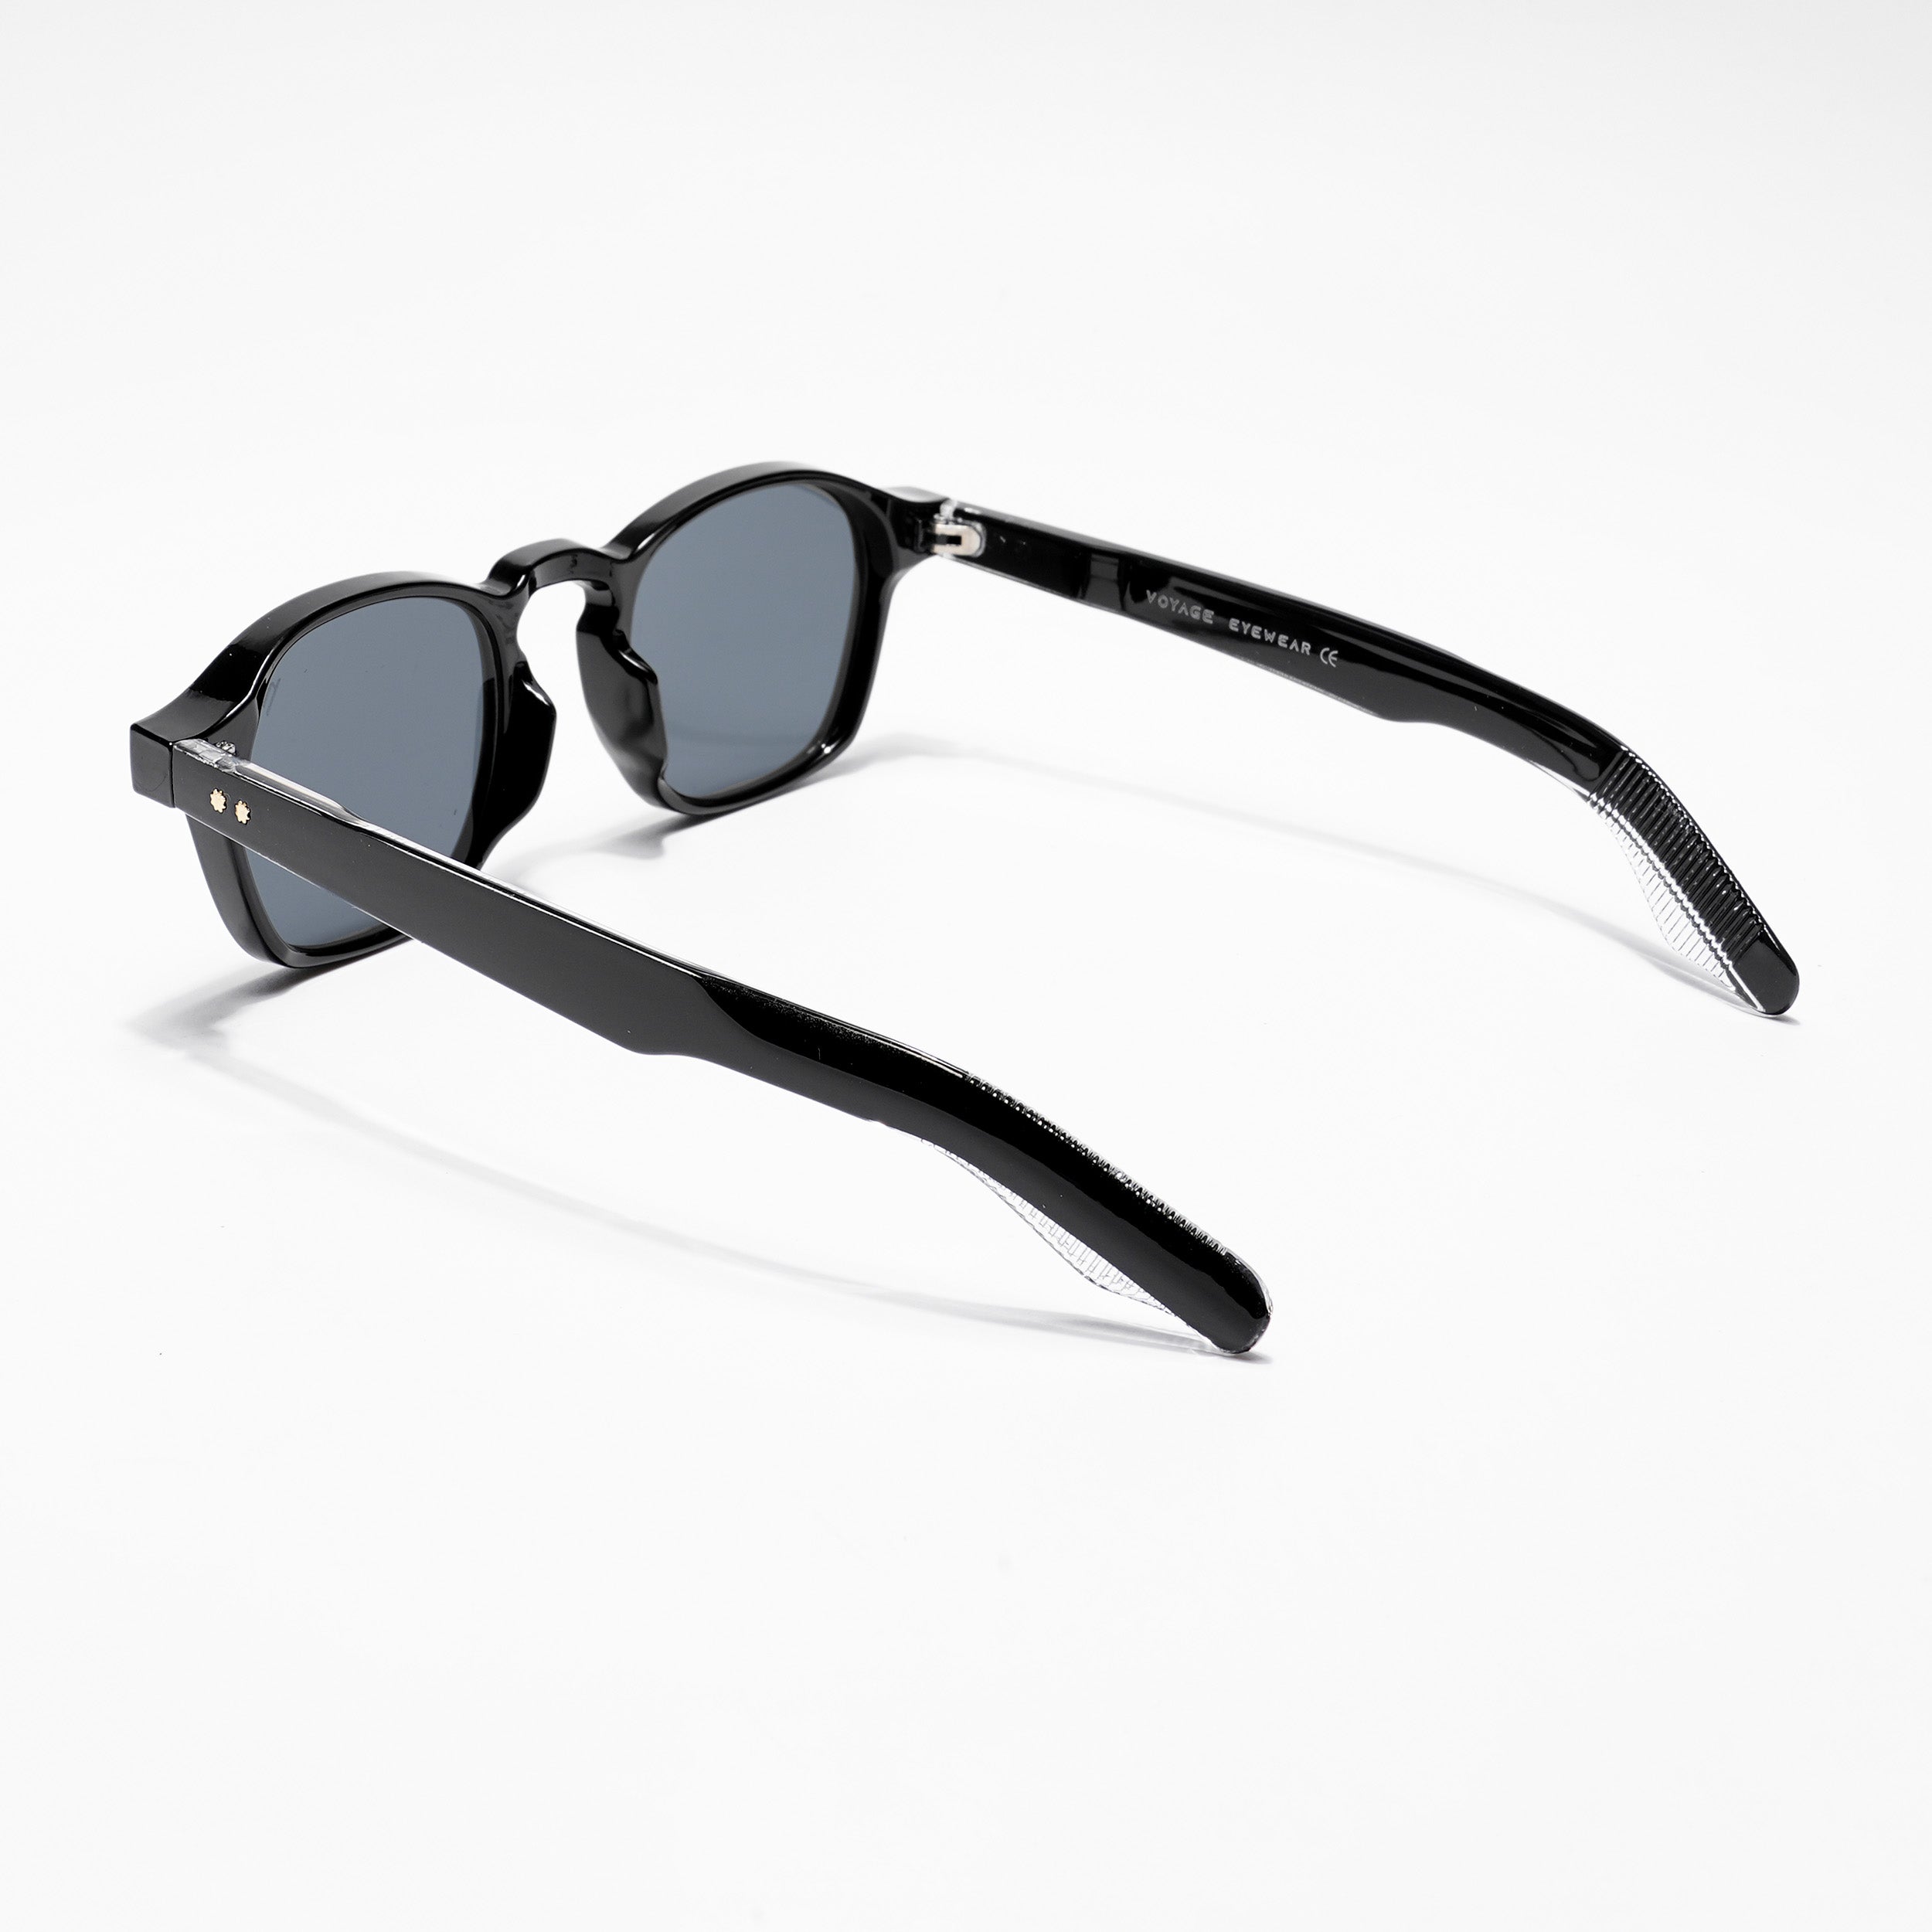 Voyage Black Round Sunglasses - MG3808